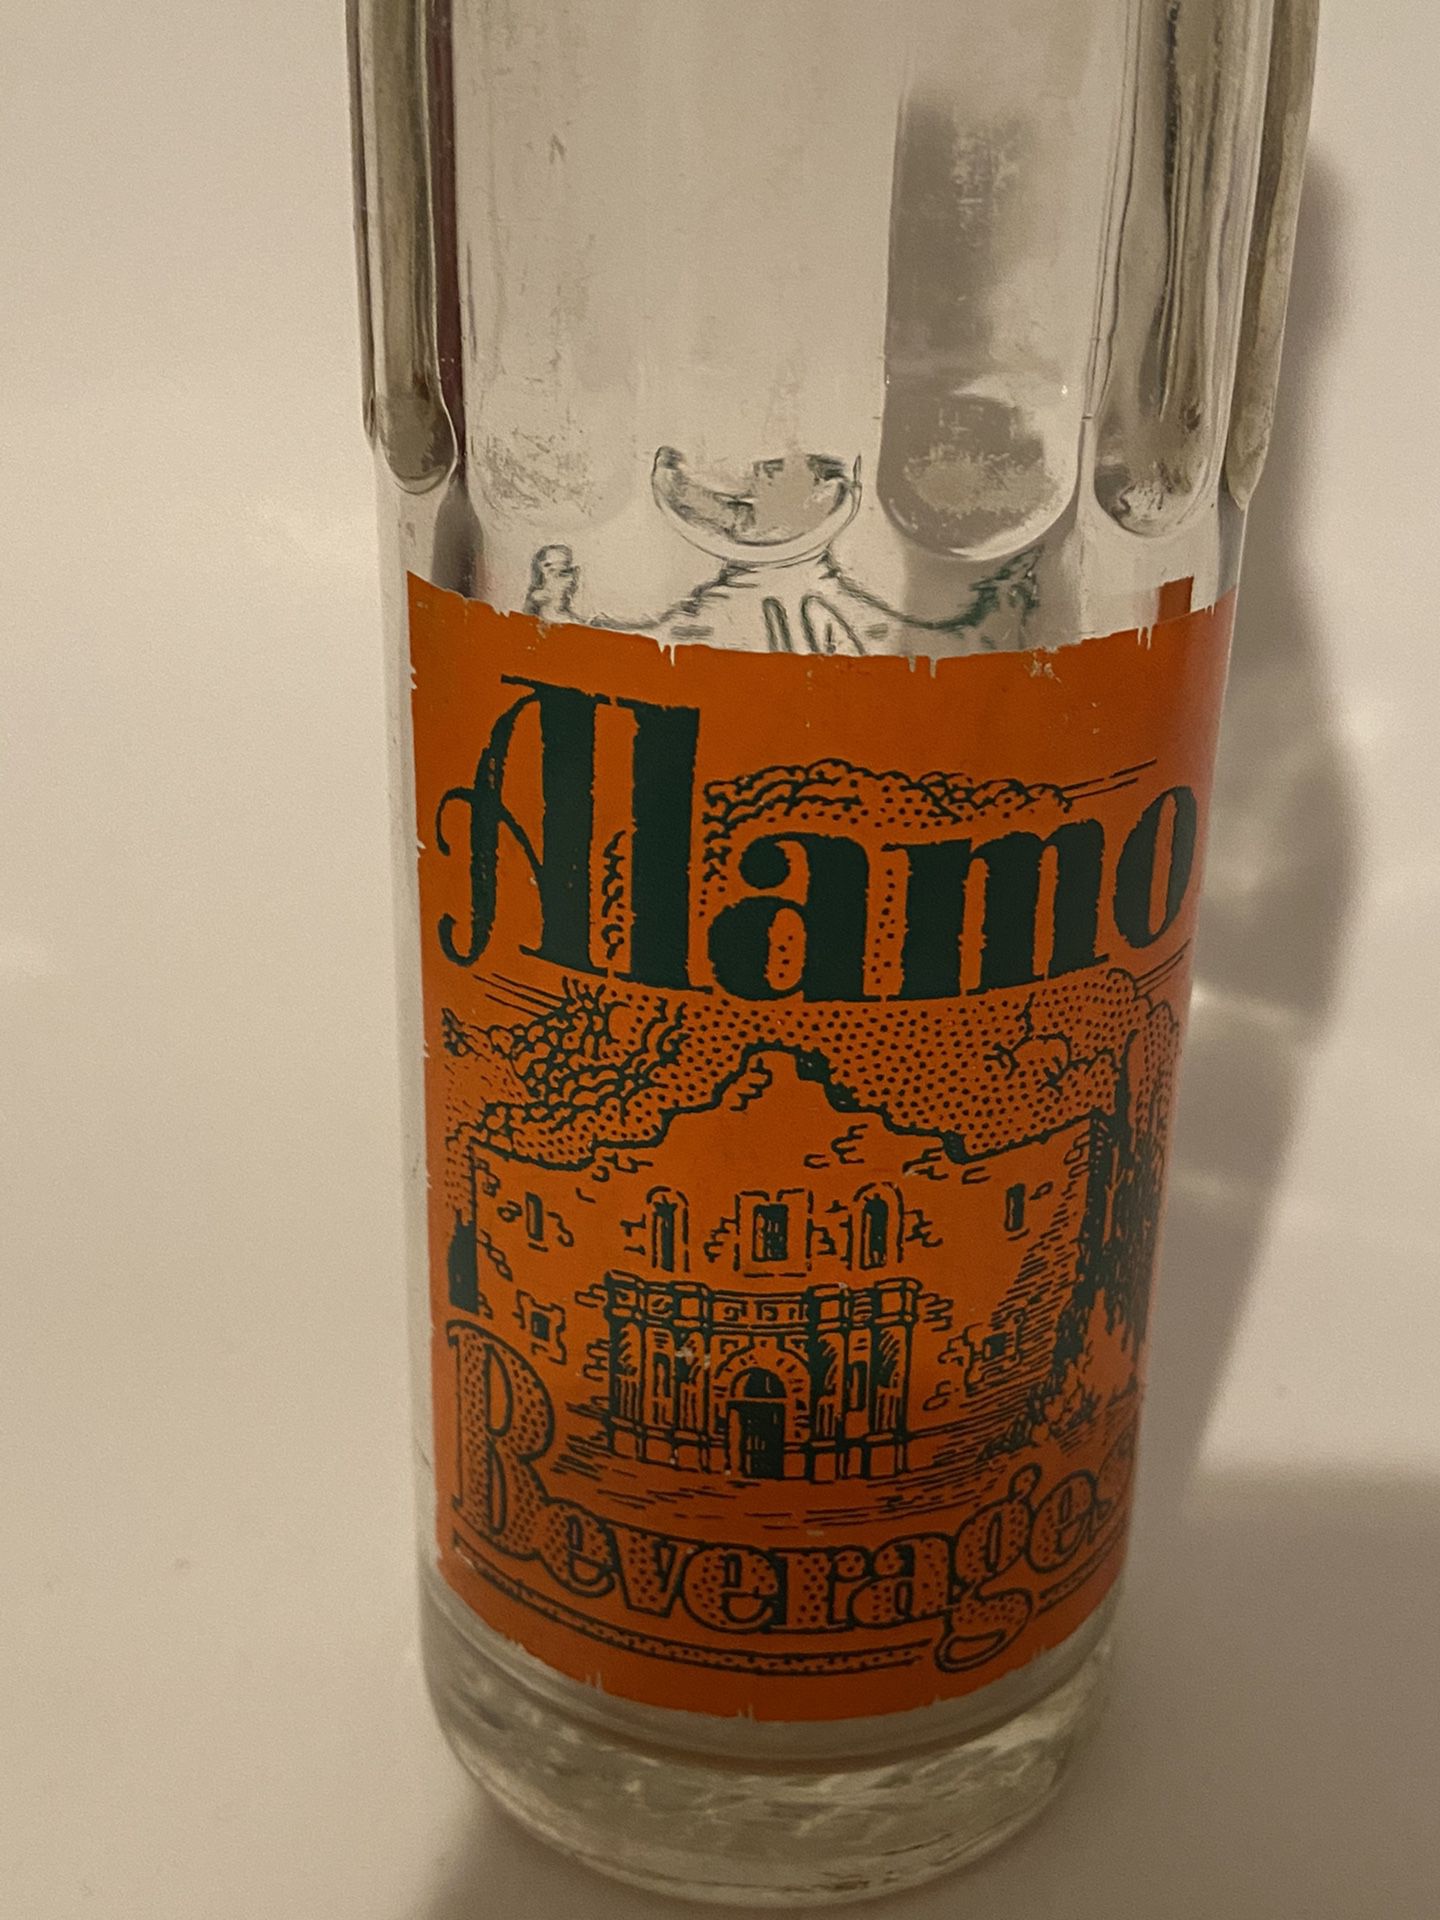 Antique Alamo Beverage bottle